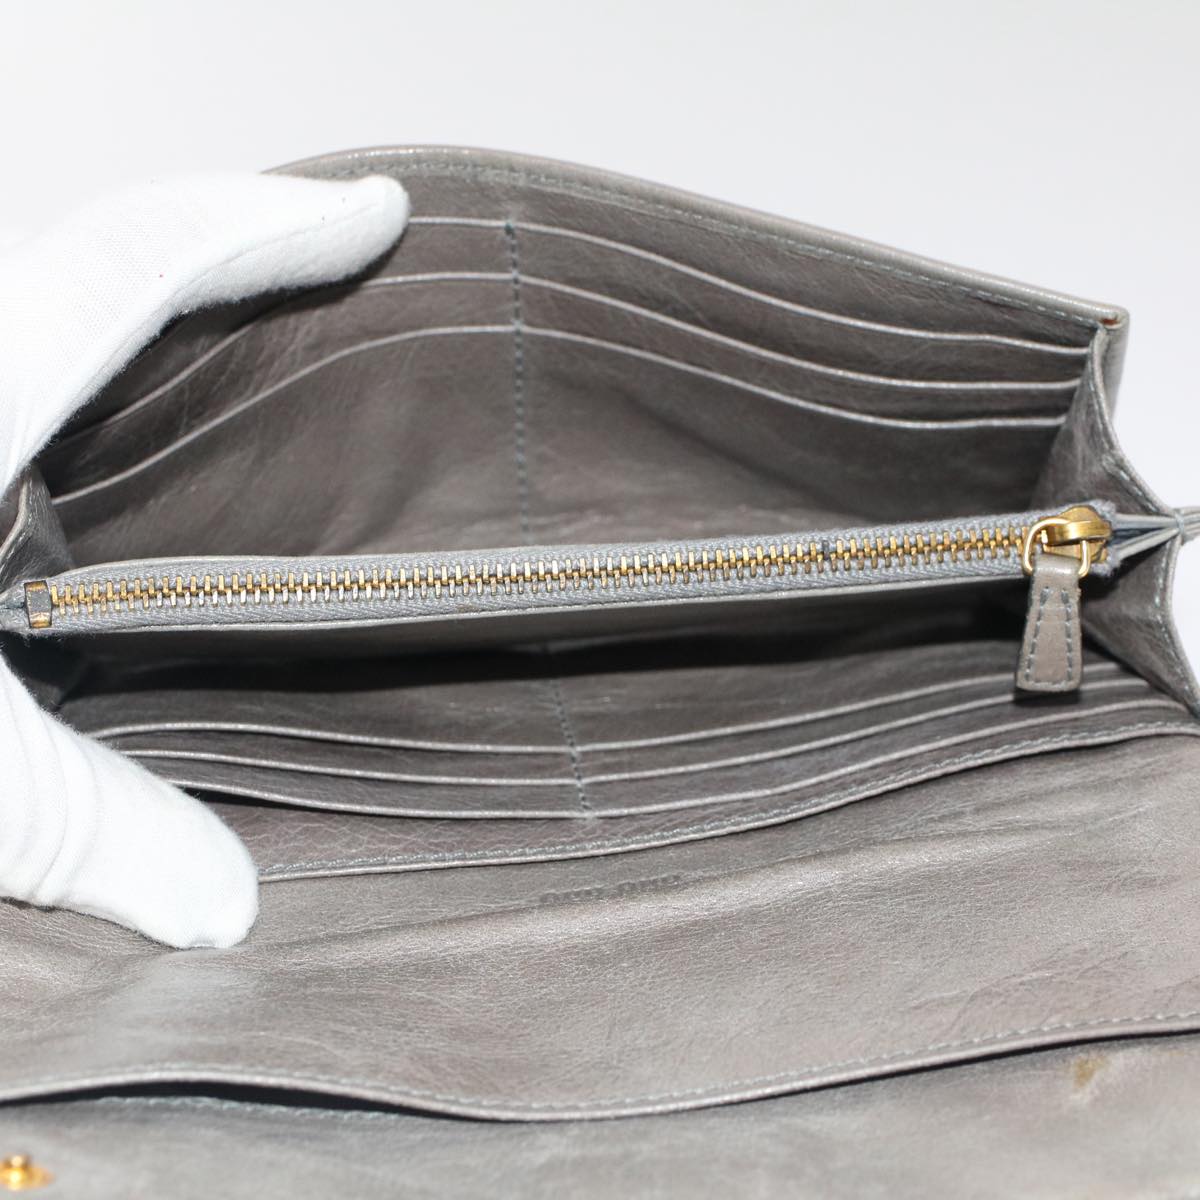 Miu Miu Long Wallet Leather Enamel 5Set Brown Yellow gray Auth bs7470